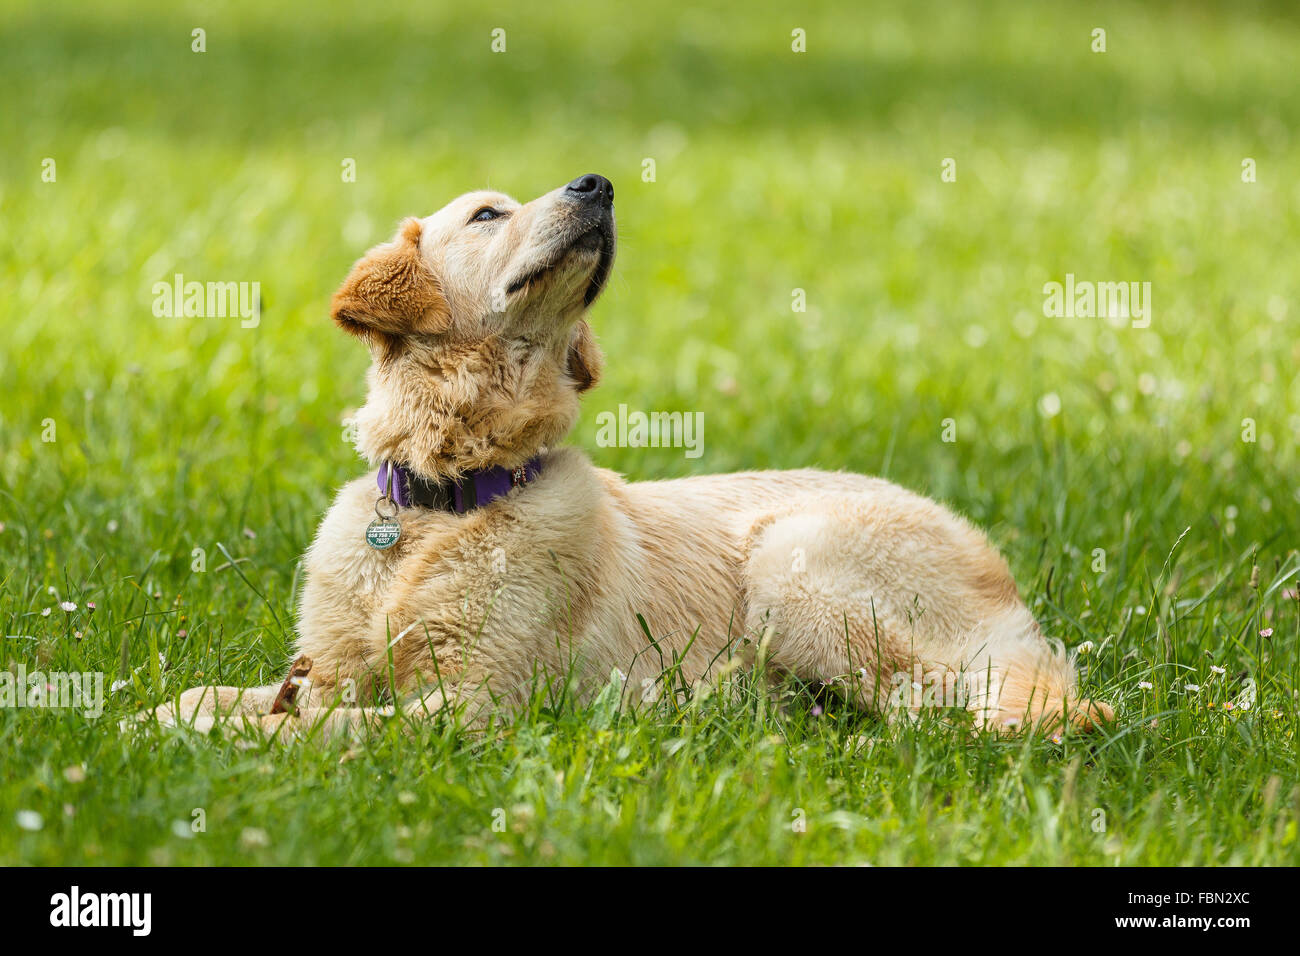 A golden retriever dog relaxing in the grass. Ramales de la Victoria, Cantabria, Spain. Stock Photo